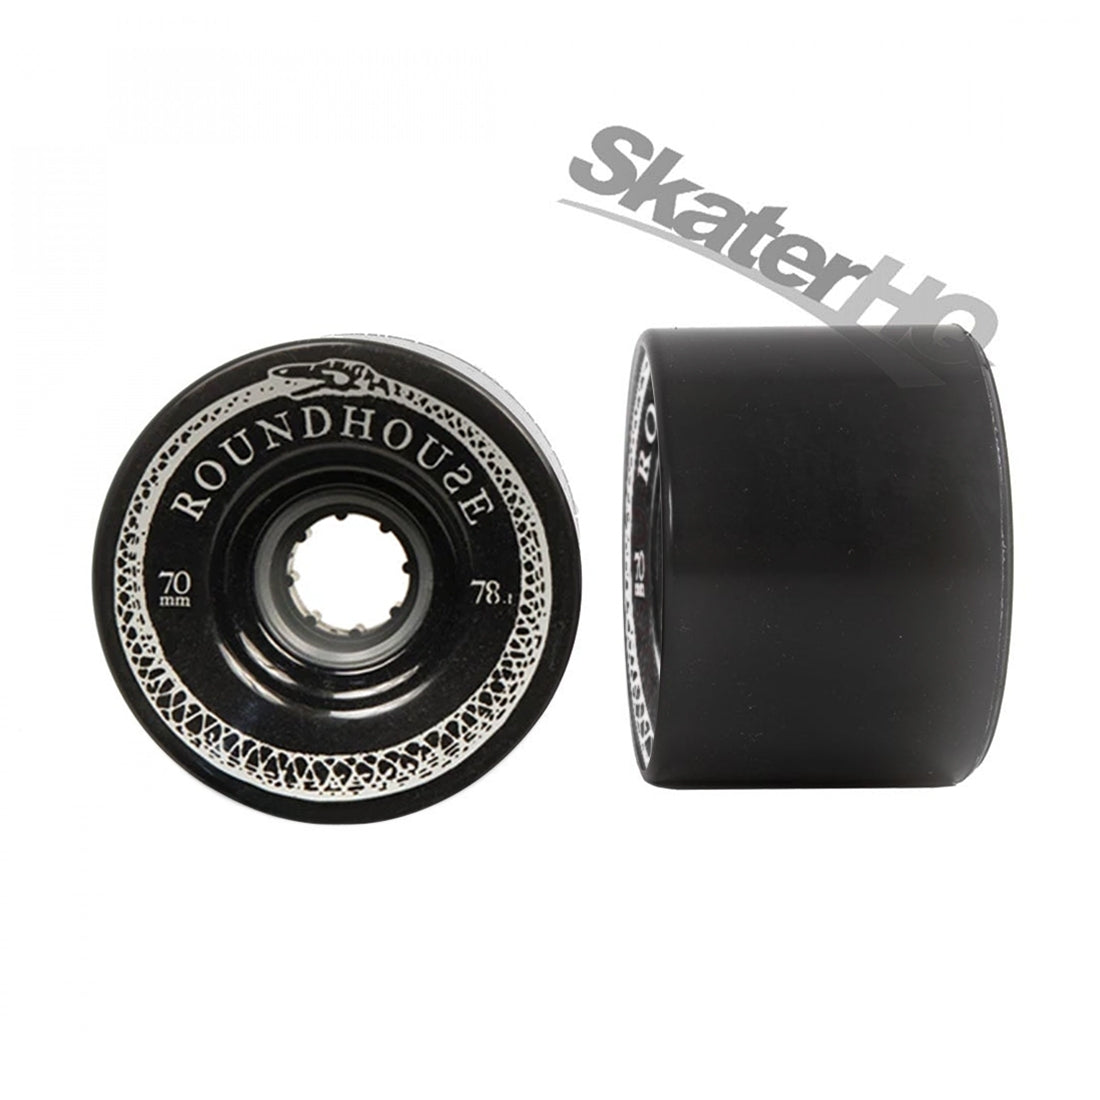 Carver Roundhouse 70mm/78A 4pk Wheels - Black Skateboard Wheels